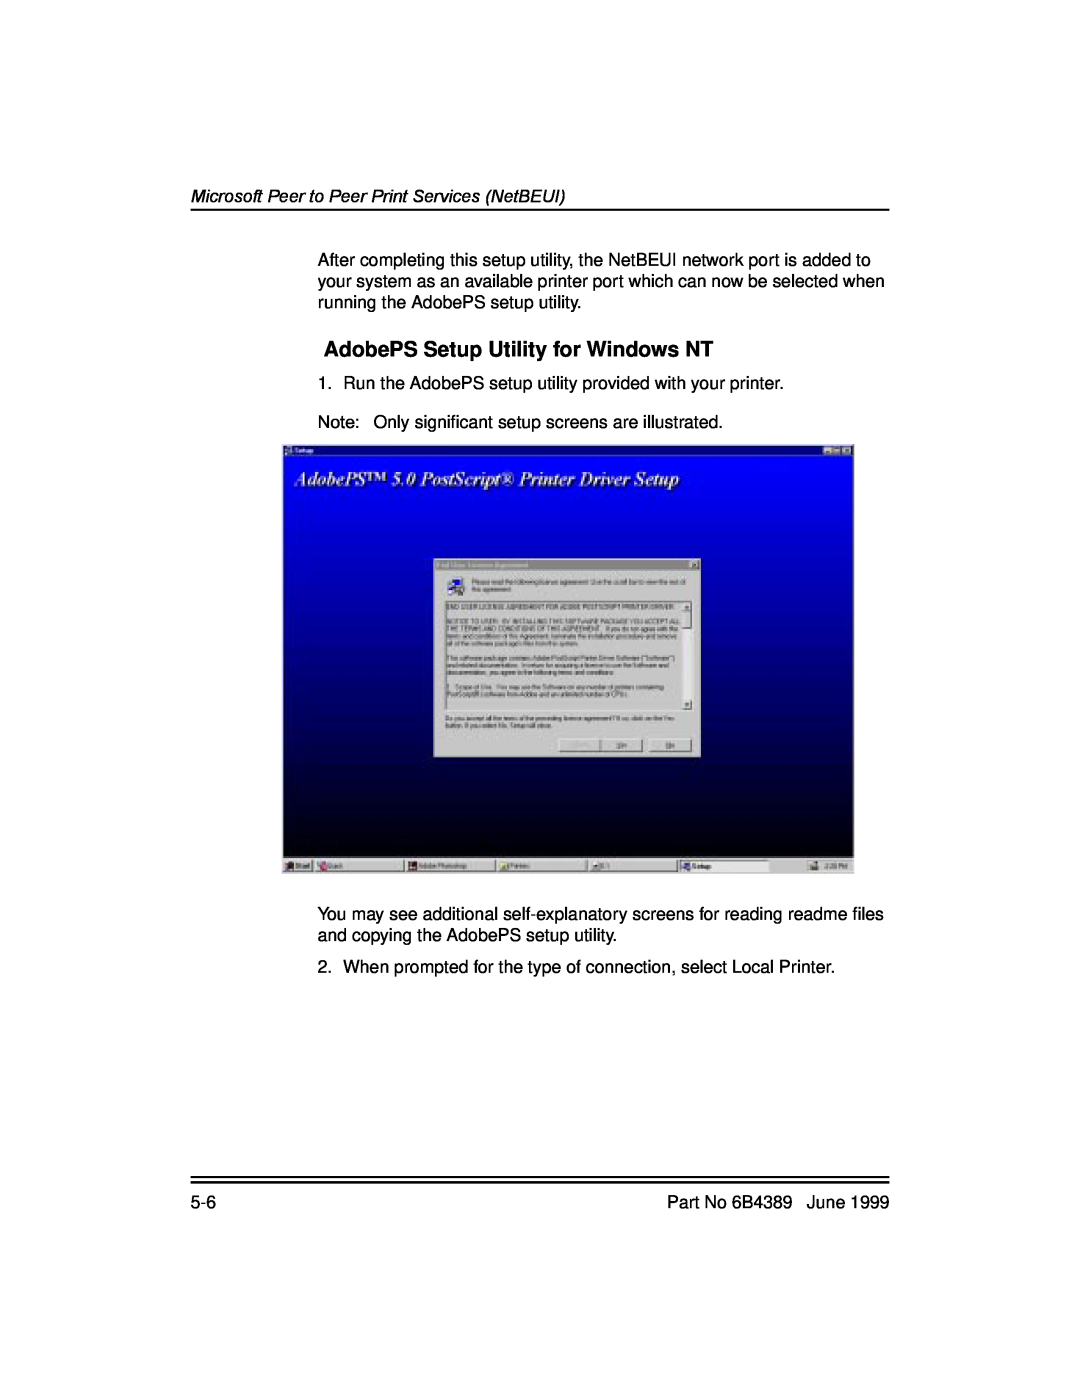 Kodak 8670, 8660 manual AdobePS Setup Utility for Windows NT, Microsoft Peer to Peer Print Services NetBEUI 